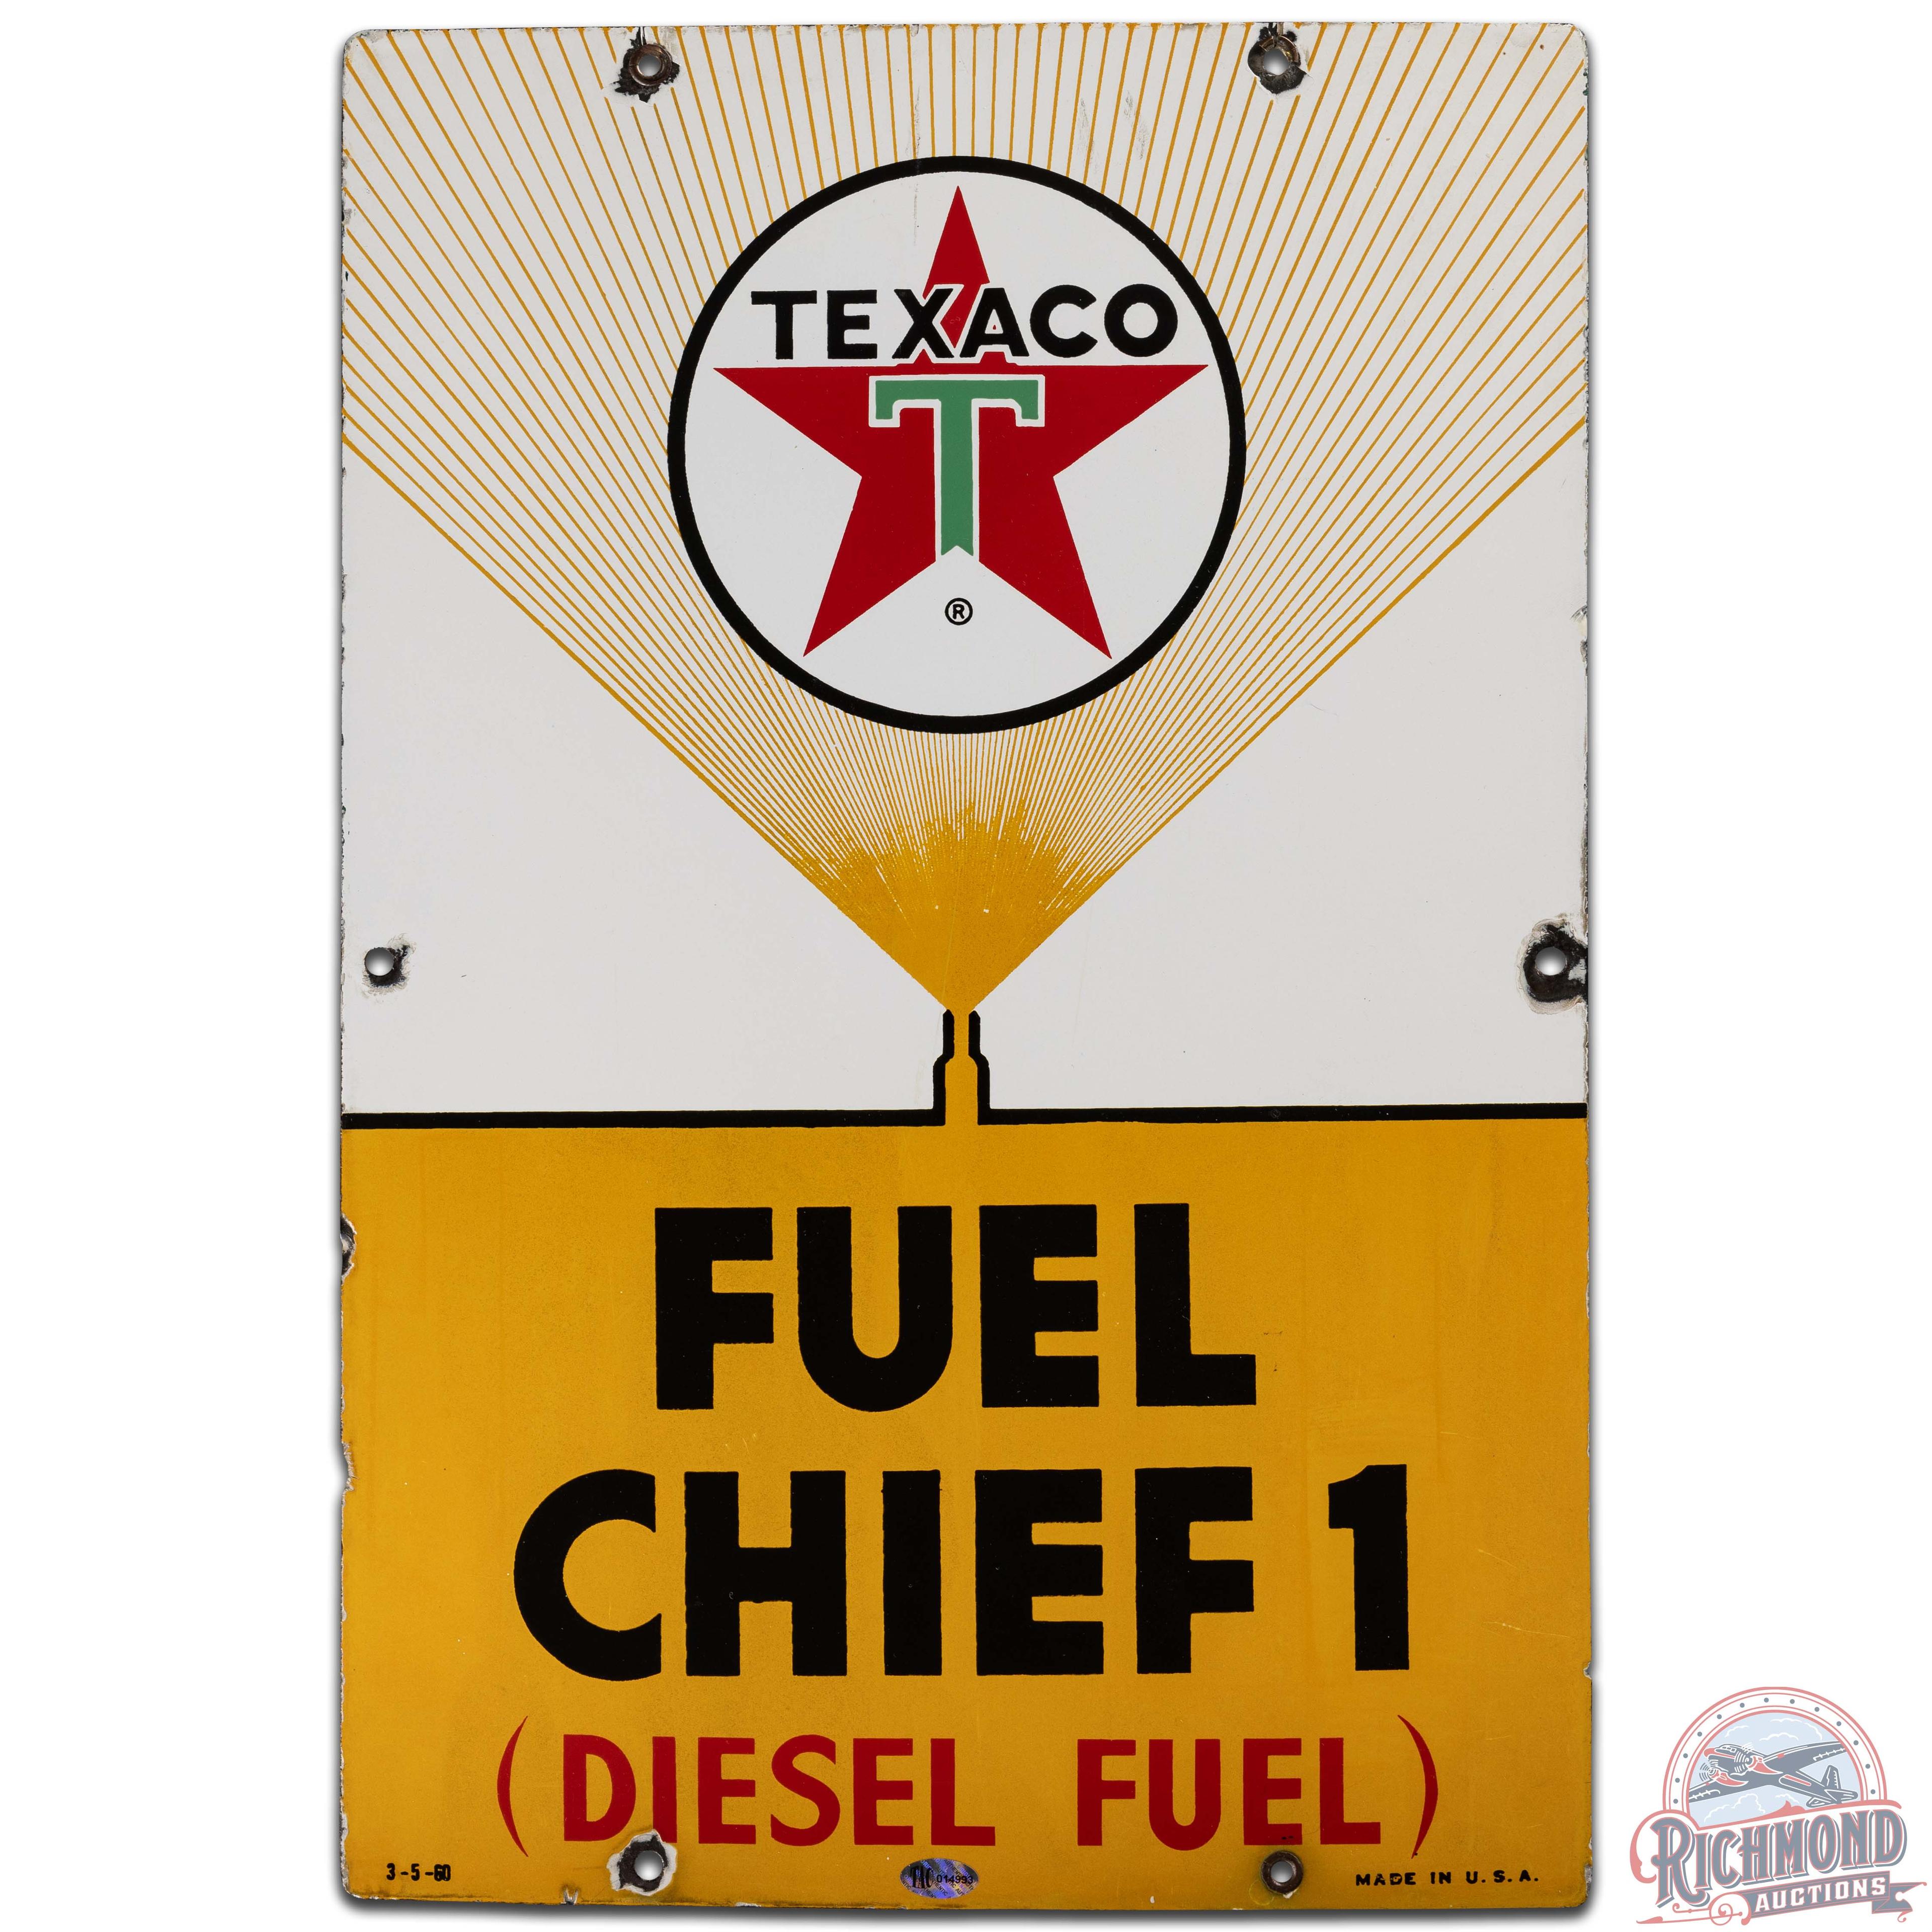 1960 Texaco Fuel Chief 1 SS Porcelain Gas Pump Plate Sign